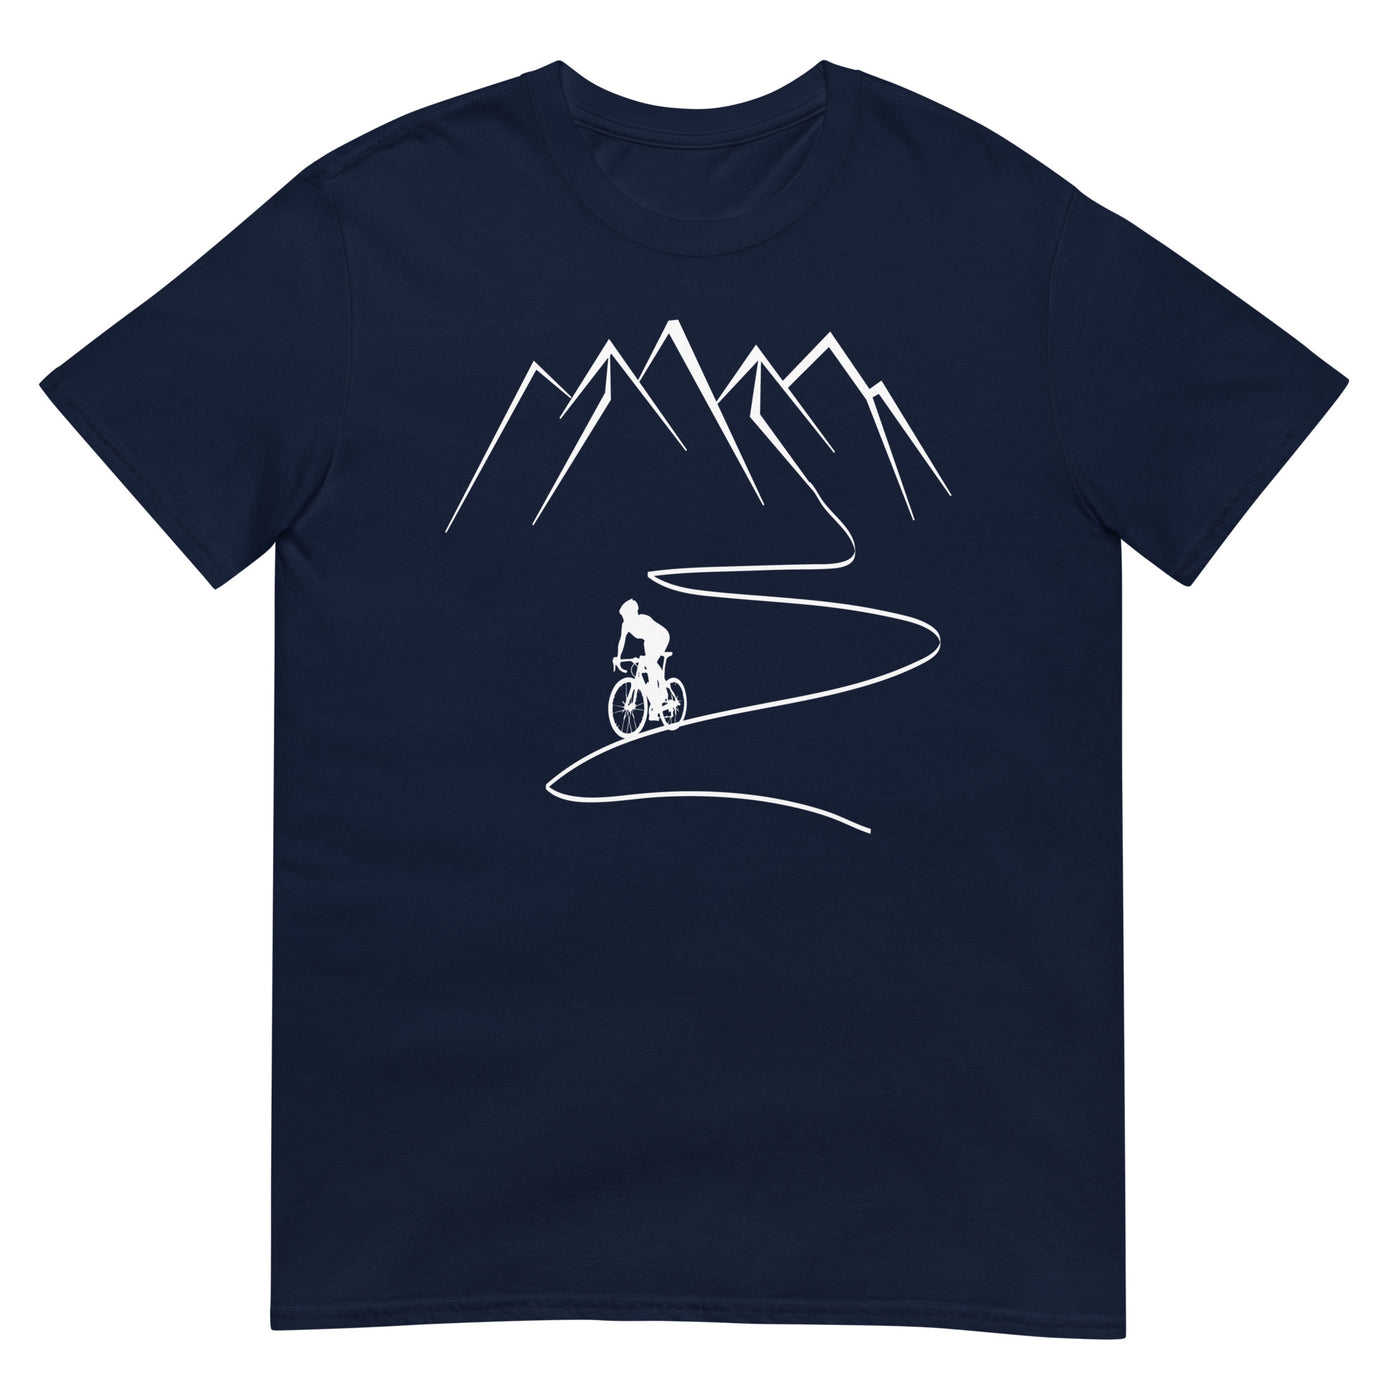 Berge - Kurve Linie - Radfahren - T-Shirt (Unisex) fahrrad xxx yyy zzz Navy